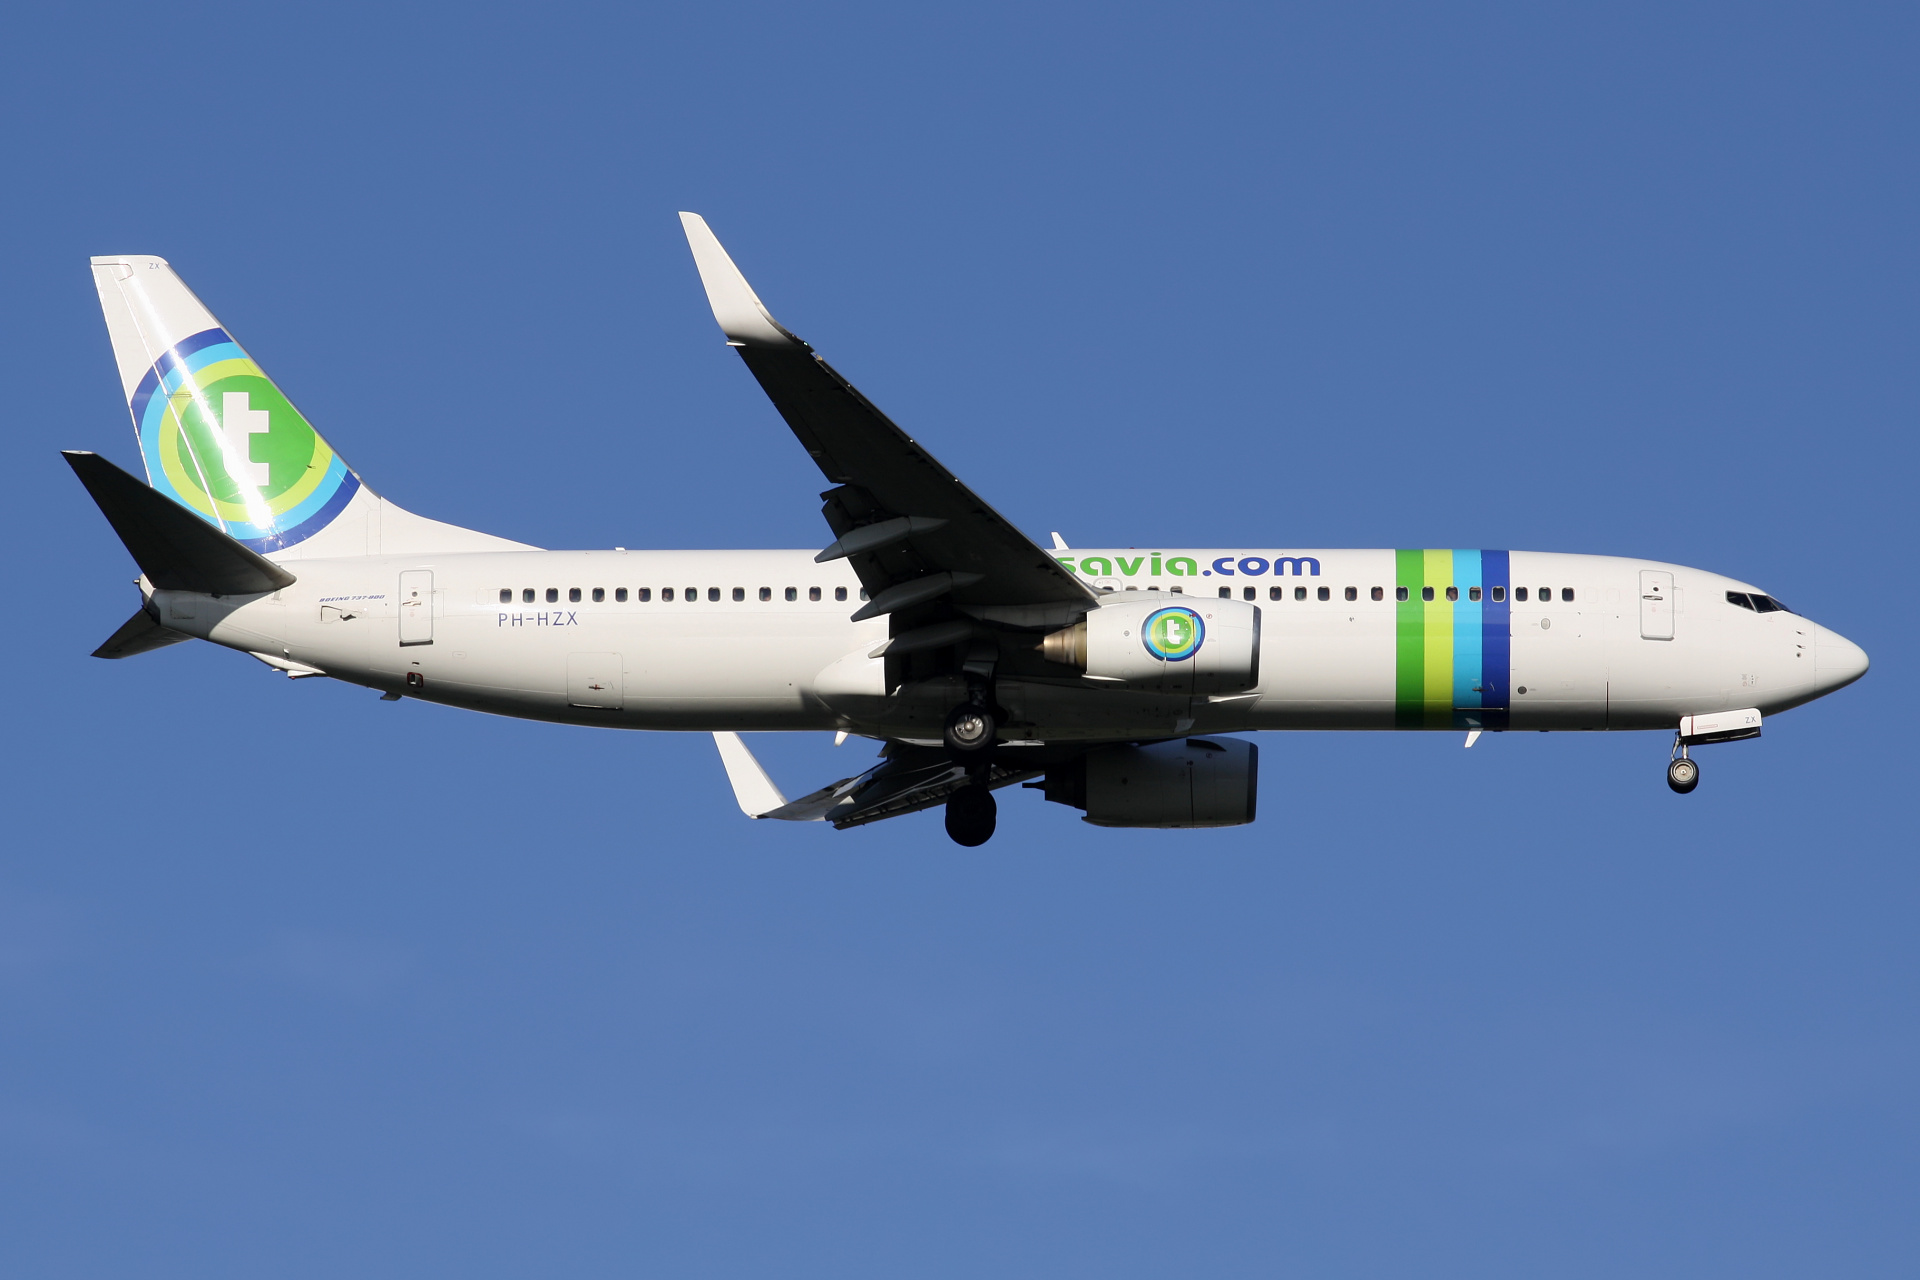 PH-HZX (Aircraft » Schiphol Spotting » Boeing 737-800 » Transavia)